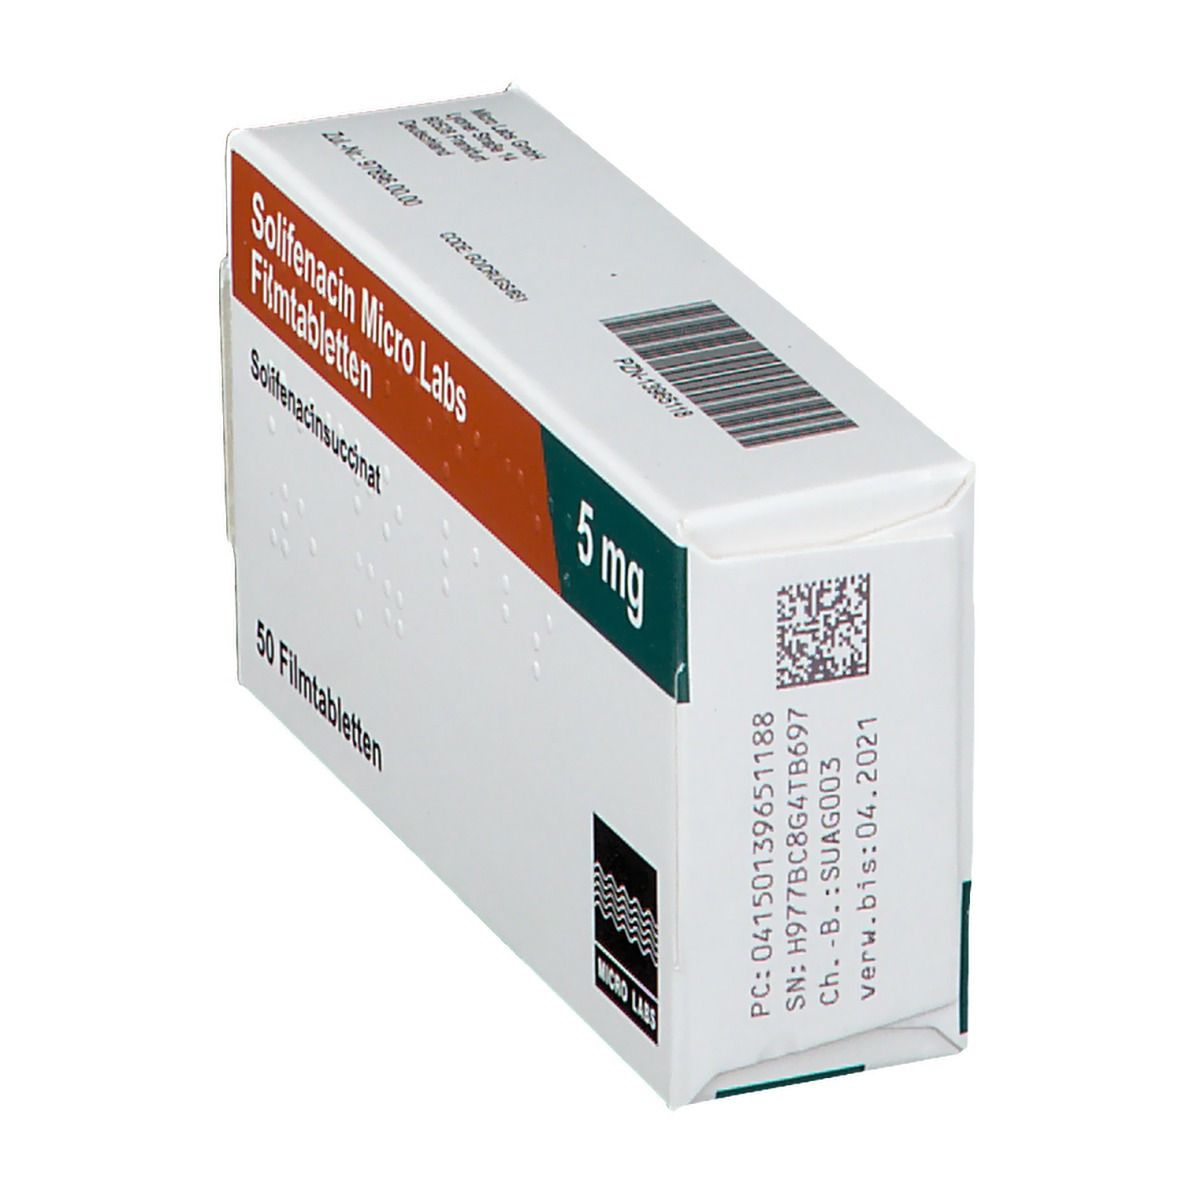 Solifenacin Micro Labs 5 mg